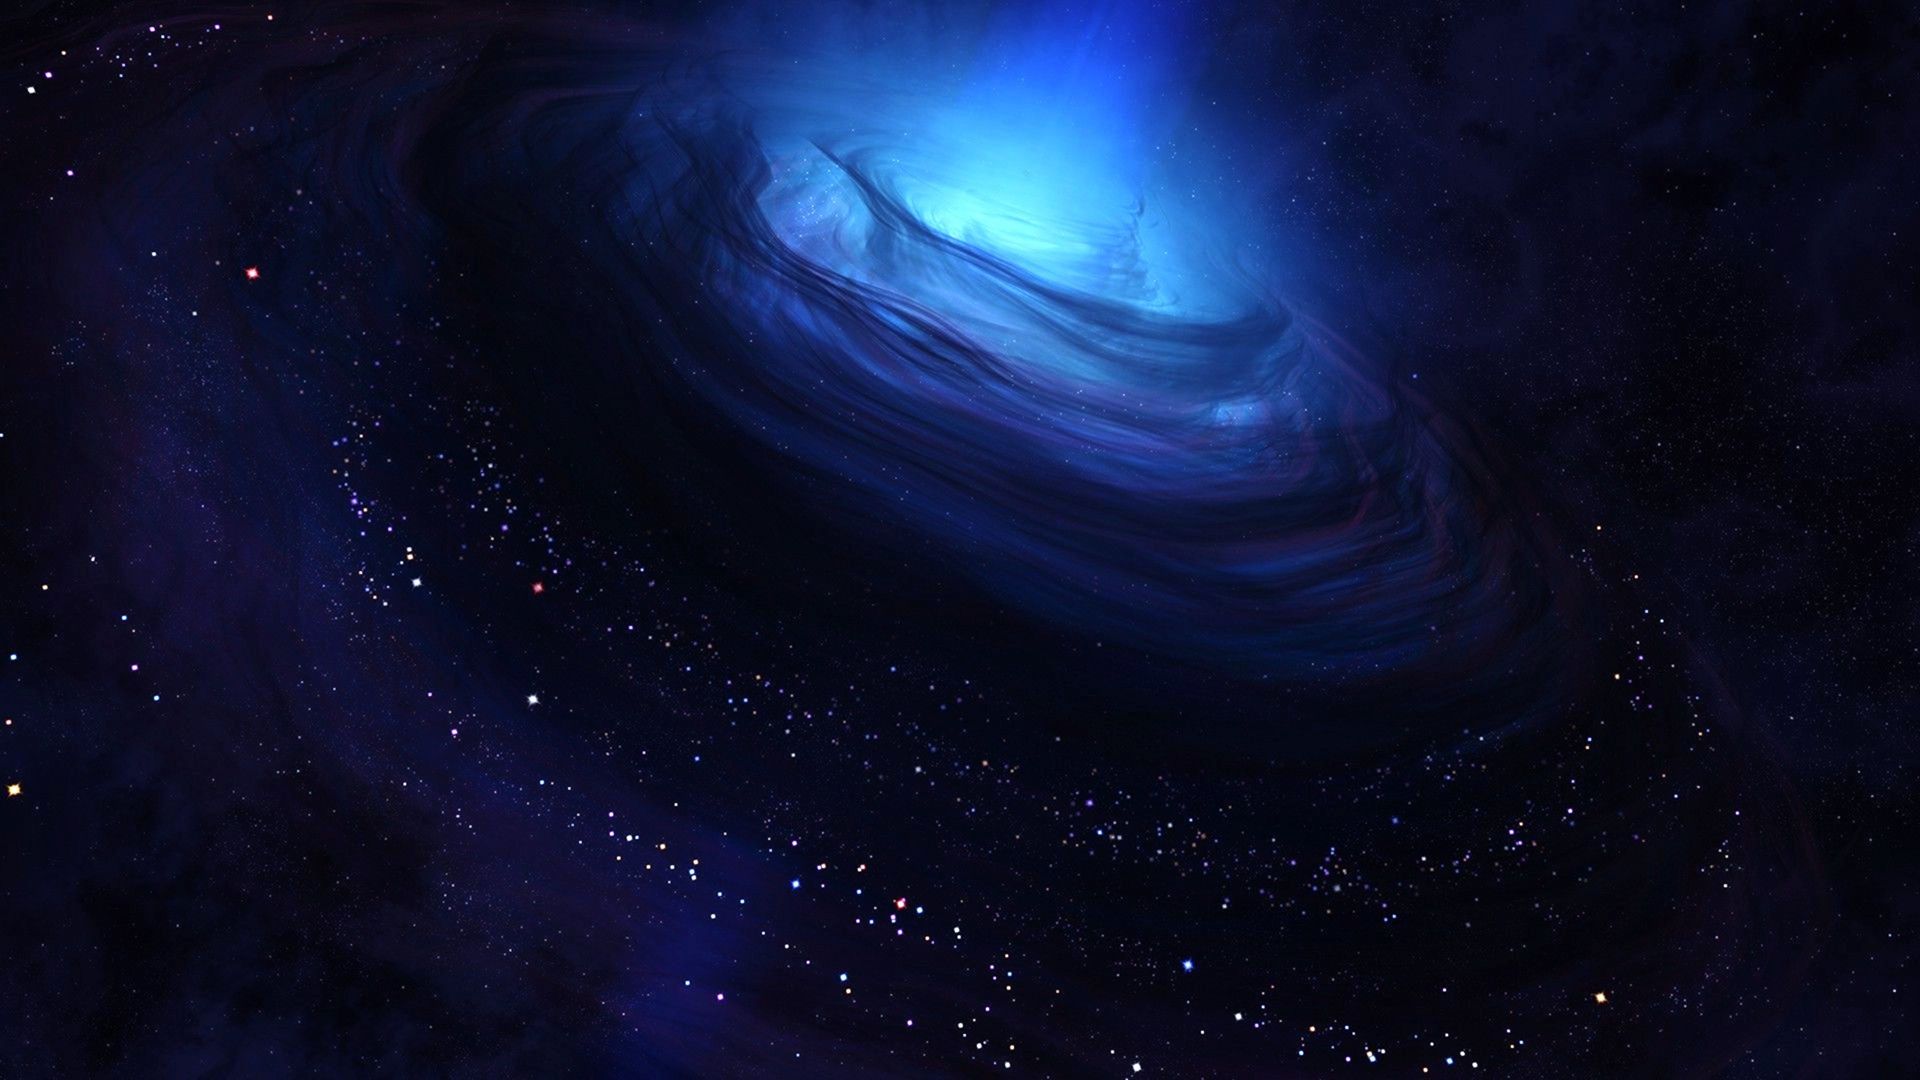 Desktop Wallpaper Galaxy, Space, Dark Clouds, Blue, Nebula, 4k, HD Image, Picture, Background, D45679